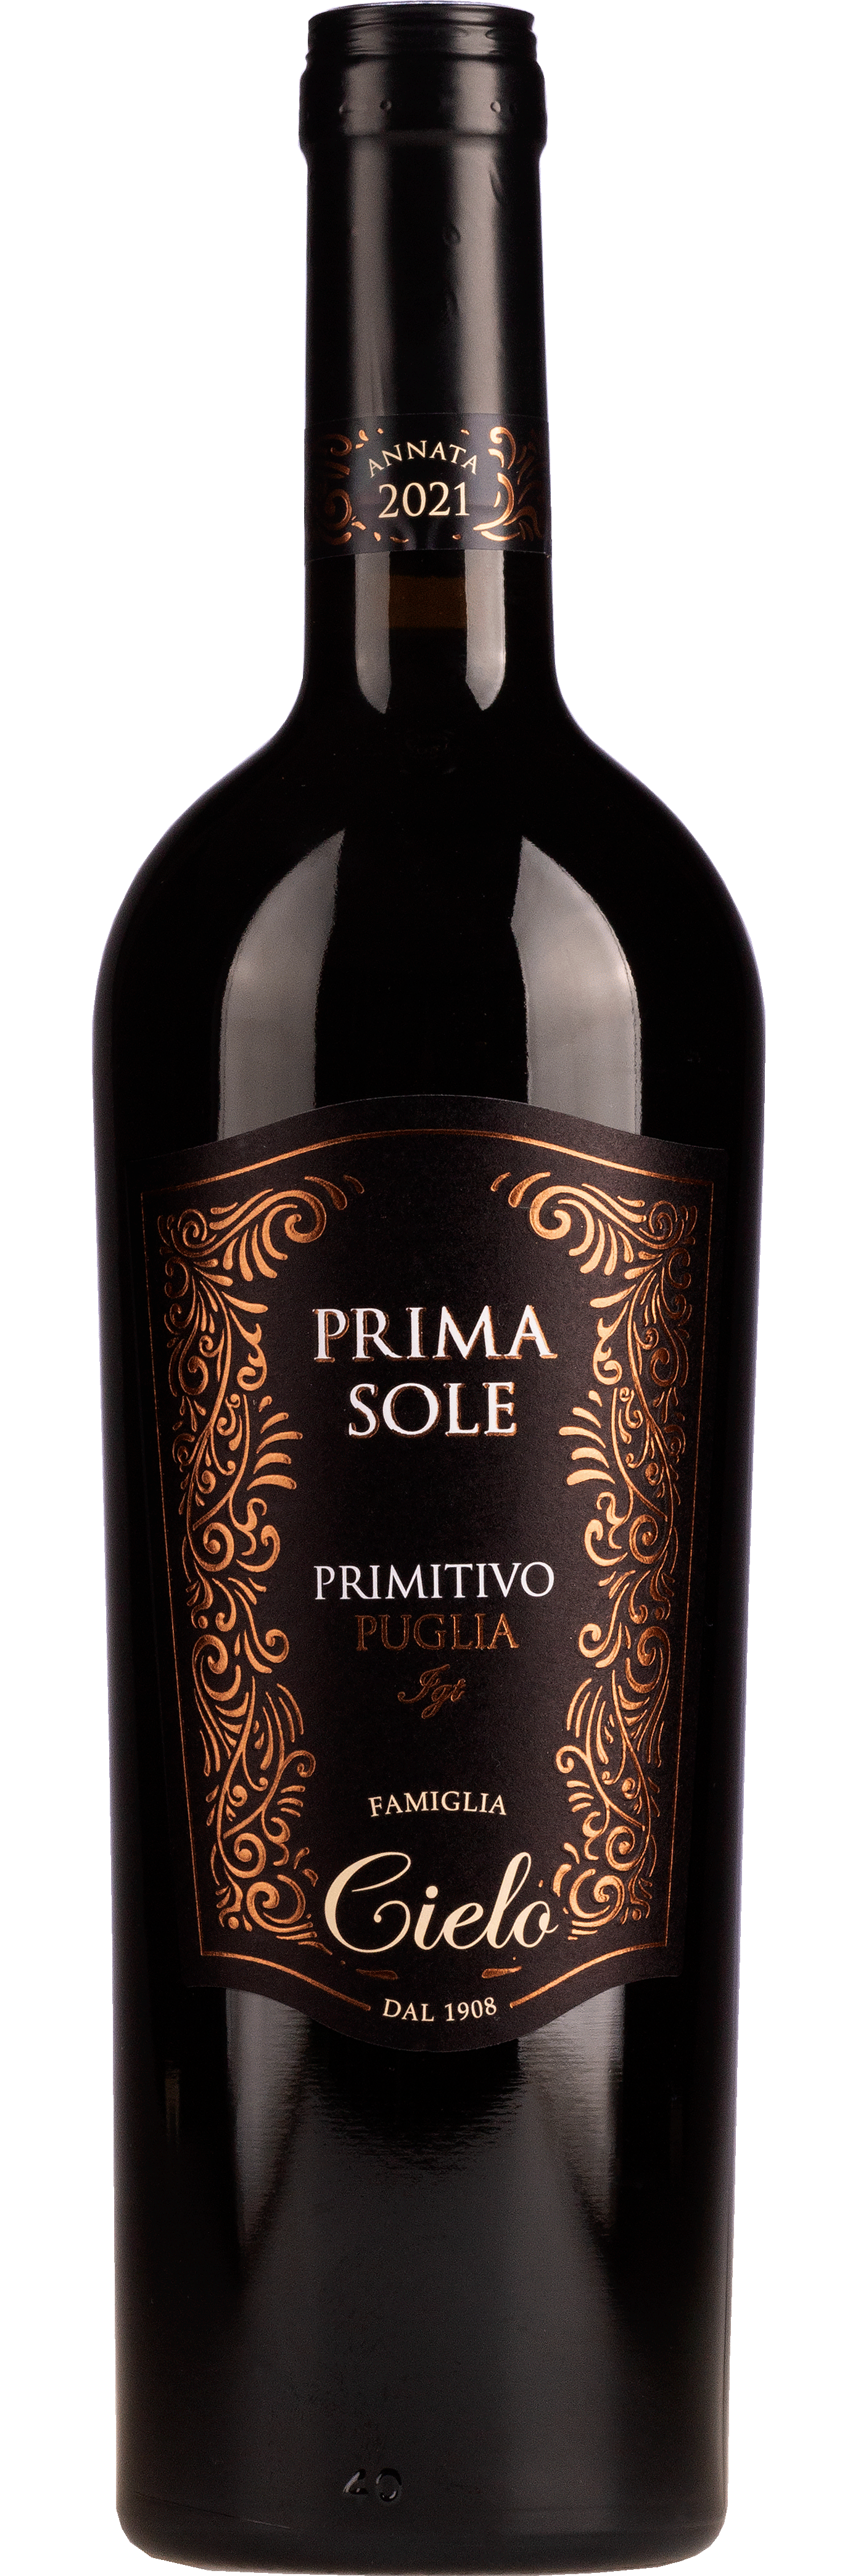 Rotwein Primitivo e 2021 IGT Apulien | aus Cielo | Primasole Terra